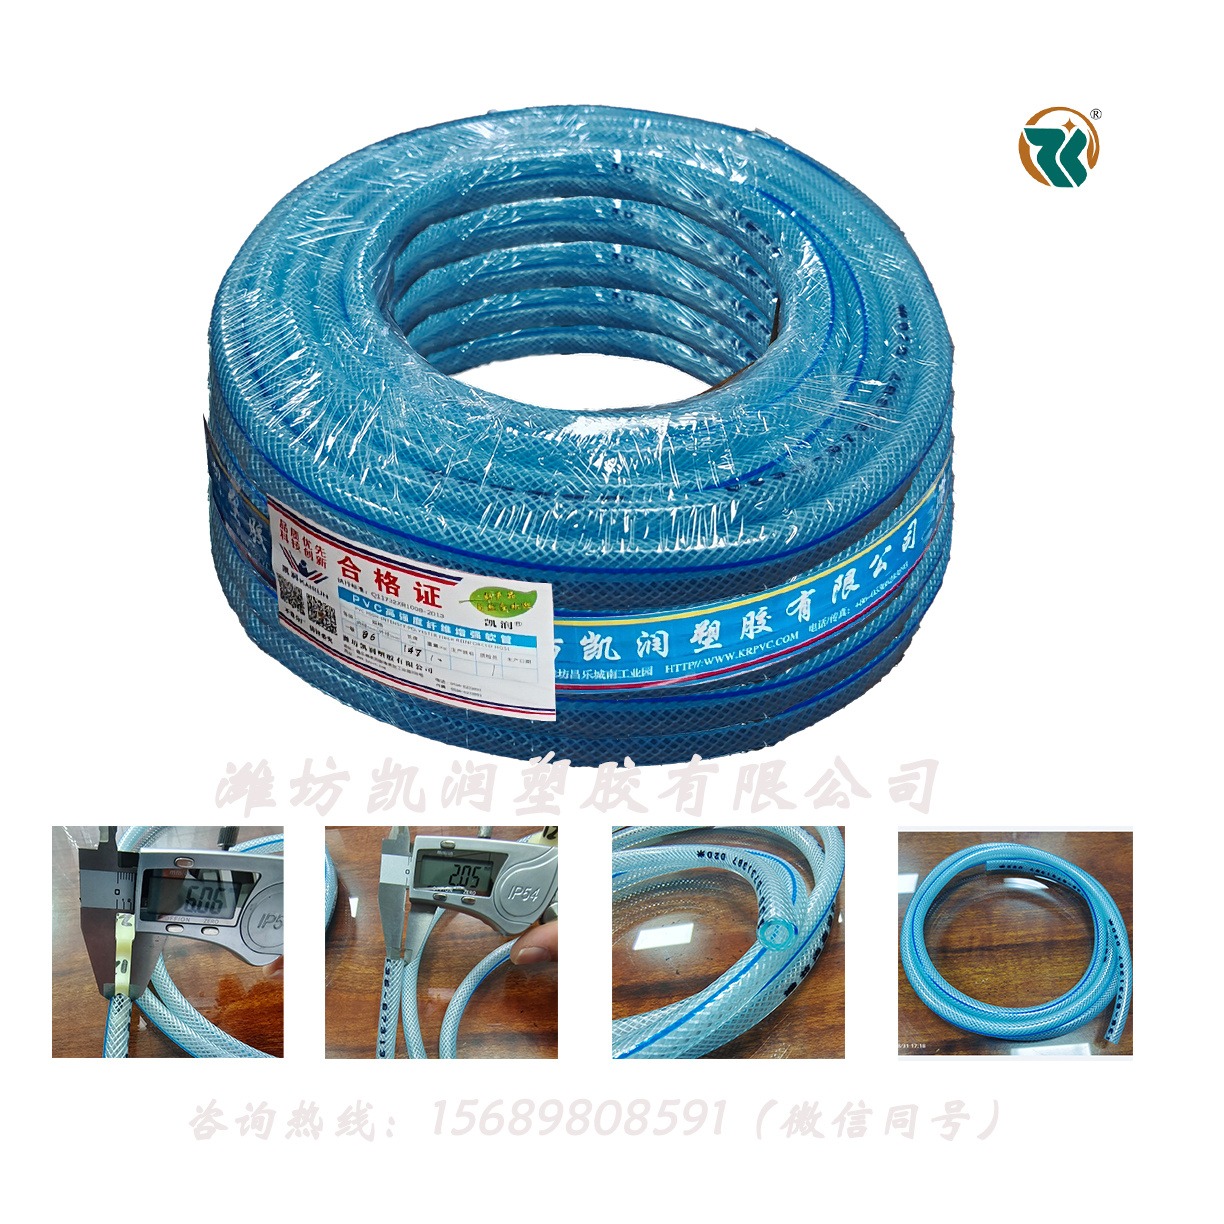 【6mm网管】中性 PVC纤维增强软管 机械配套 皮管 网纹管 耐用水管